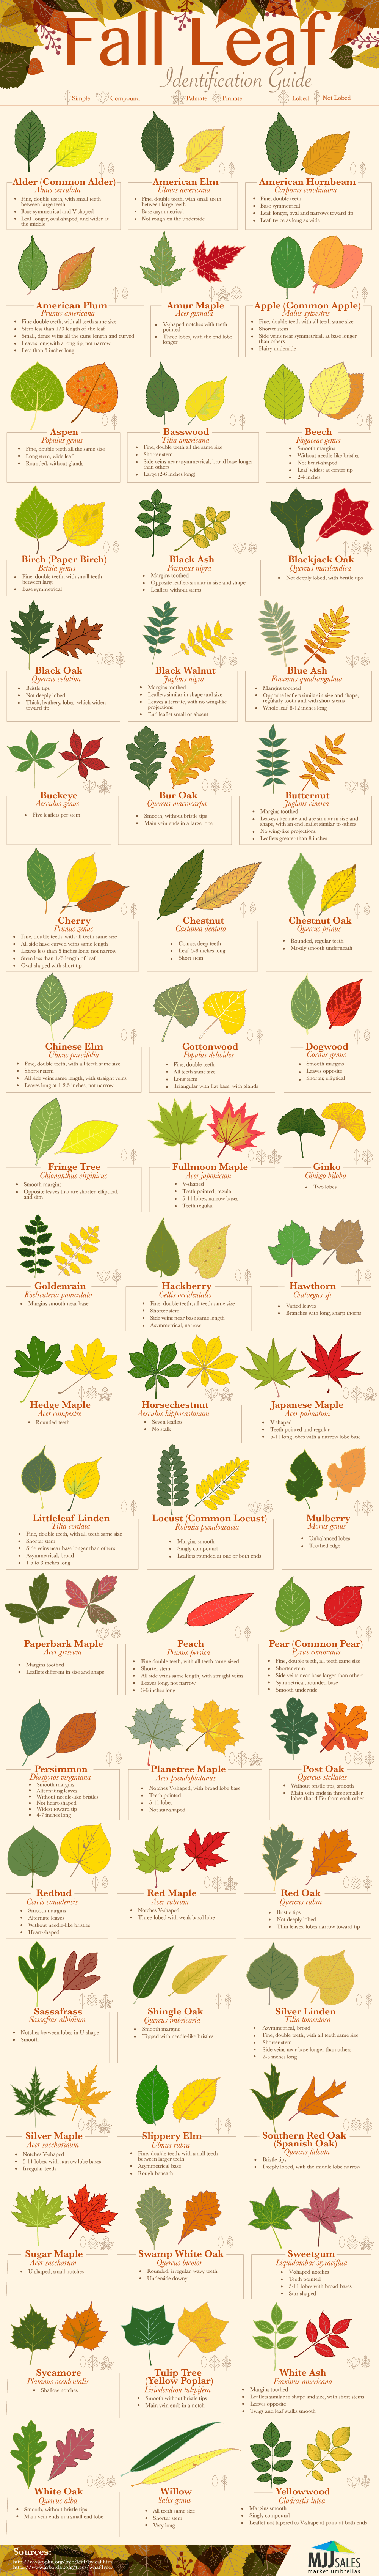 Fall Leaf Identification Guide | MJJSales.com